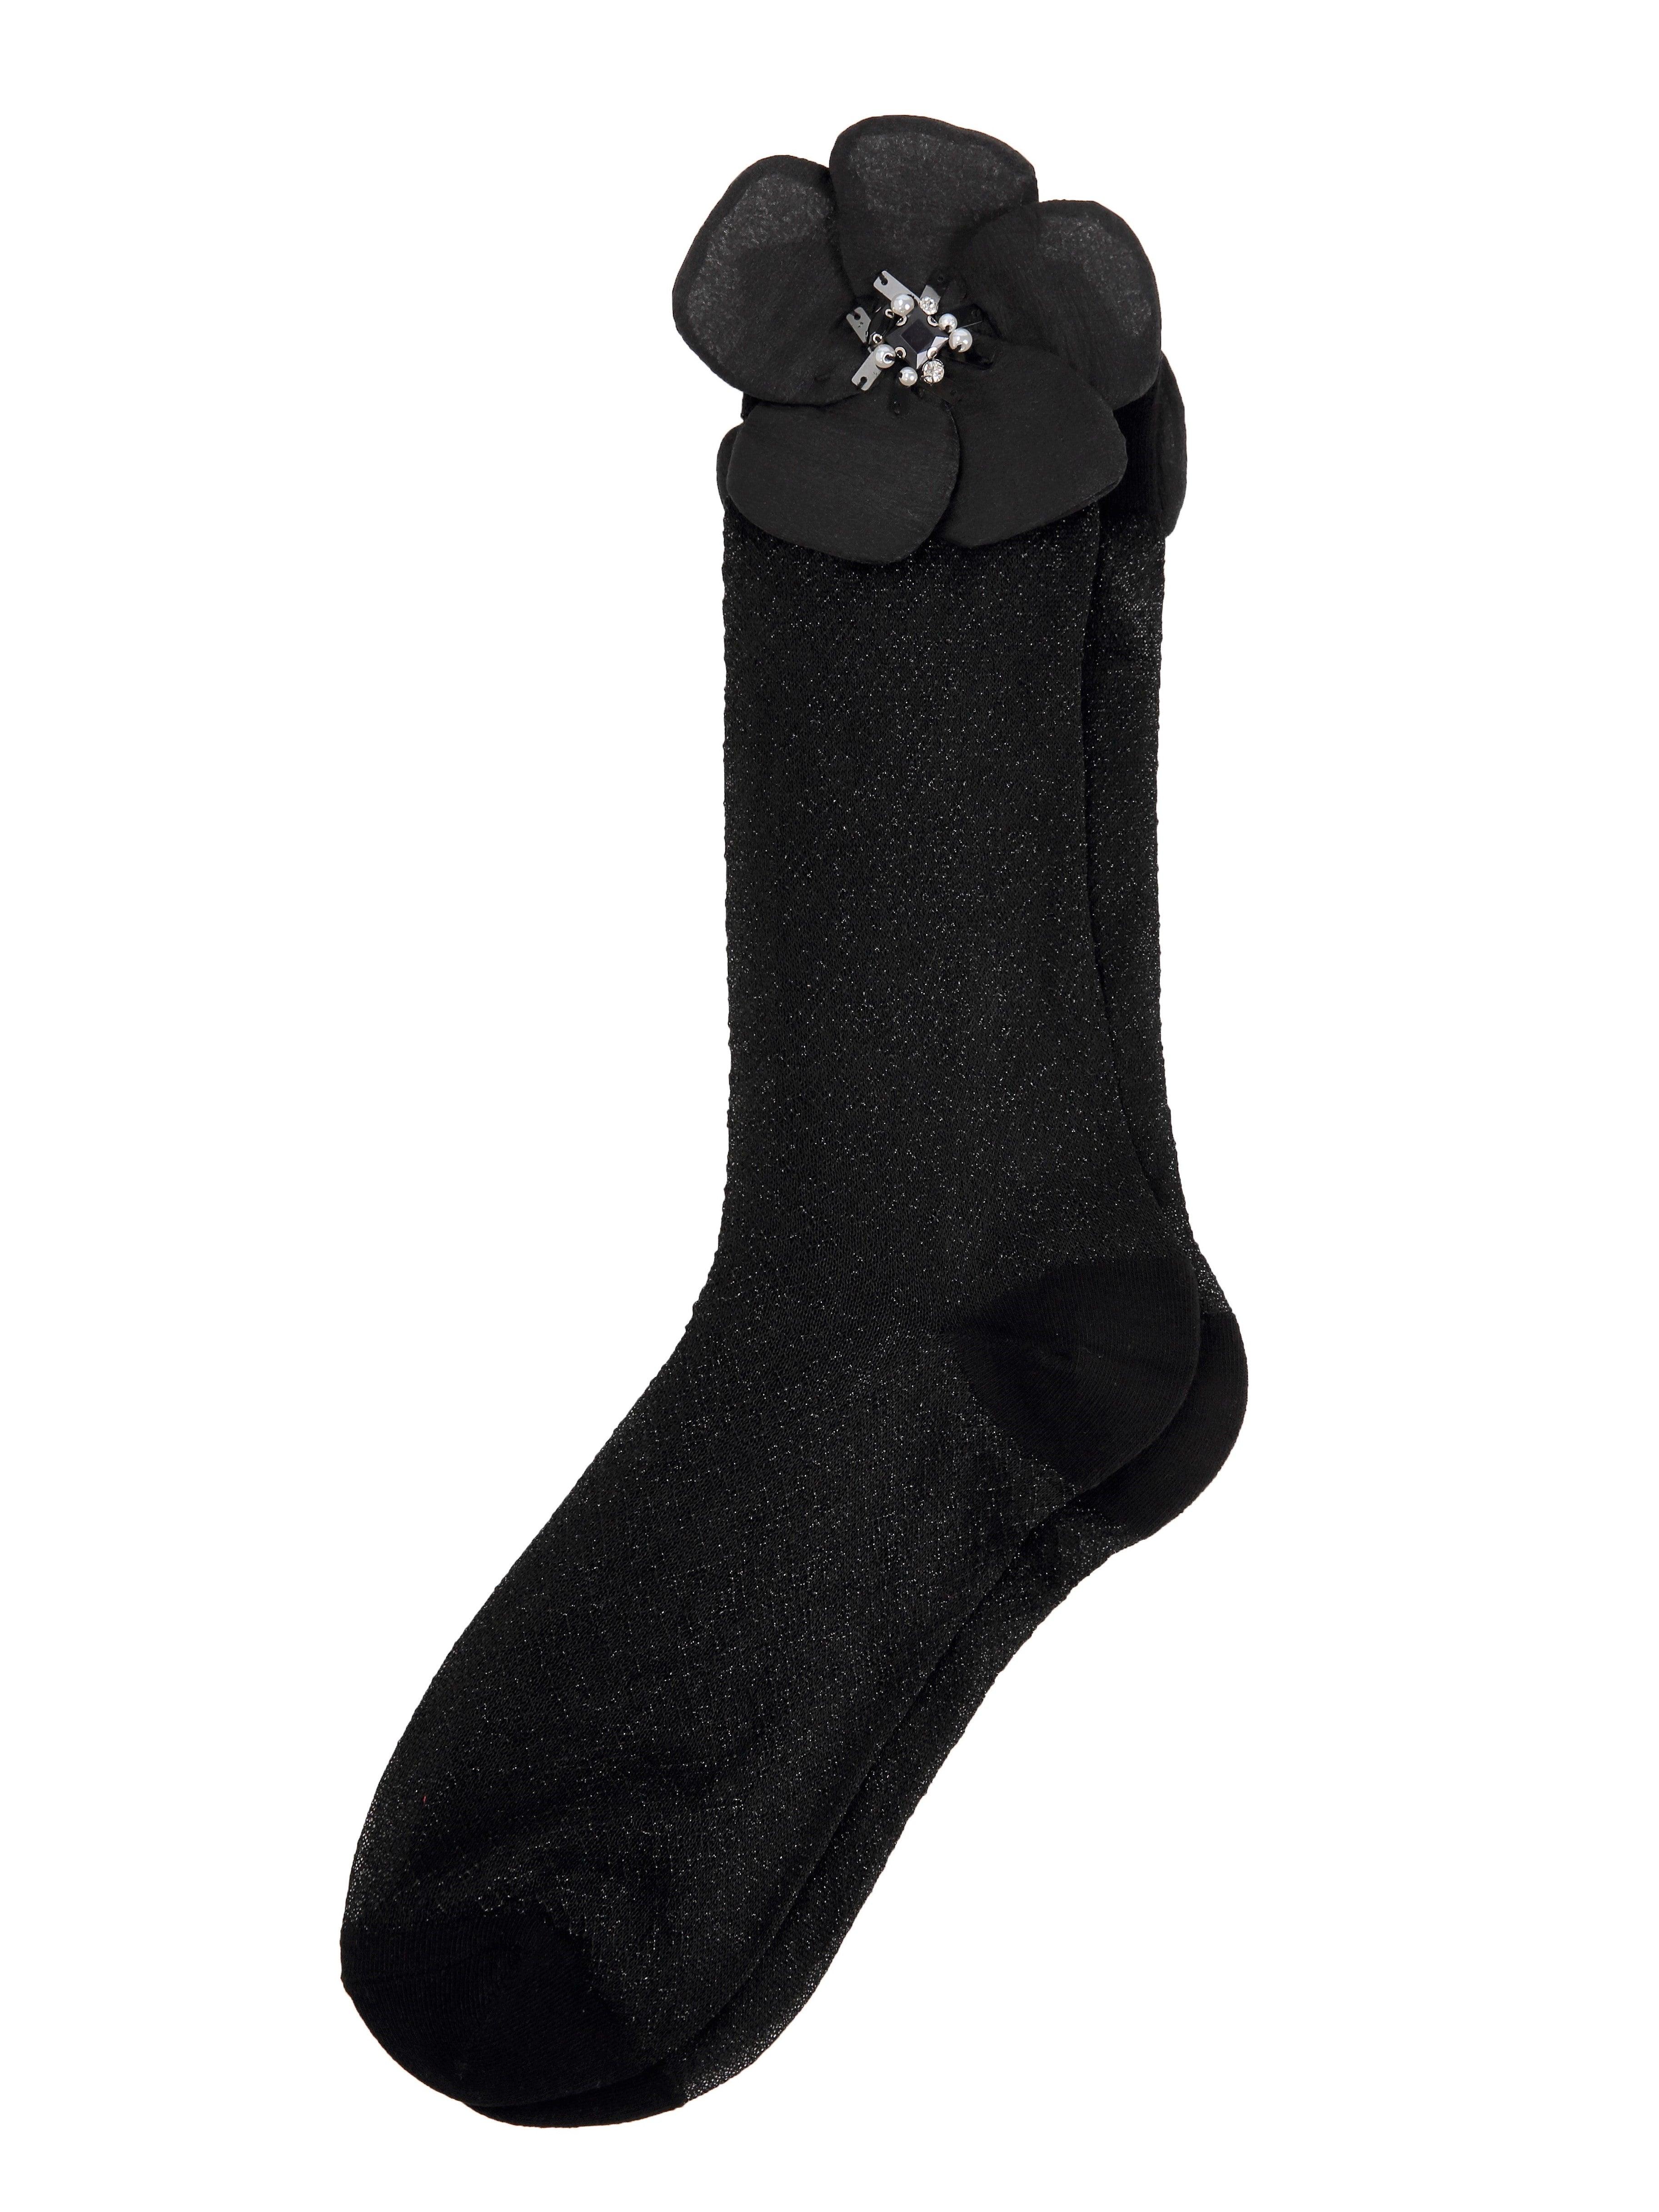 Crystal Floral Stretch Black/White Tulle Socks - Uniqvibe